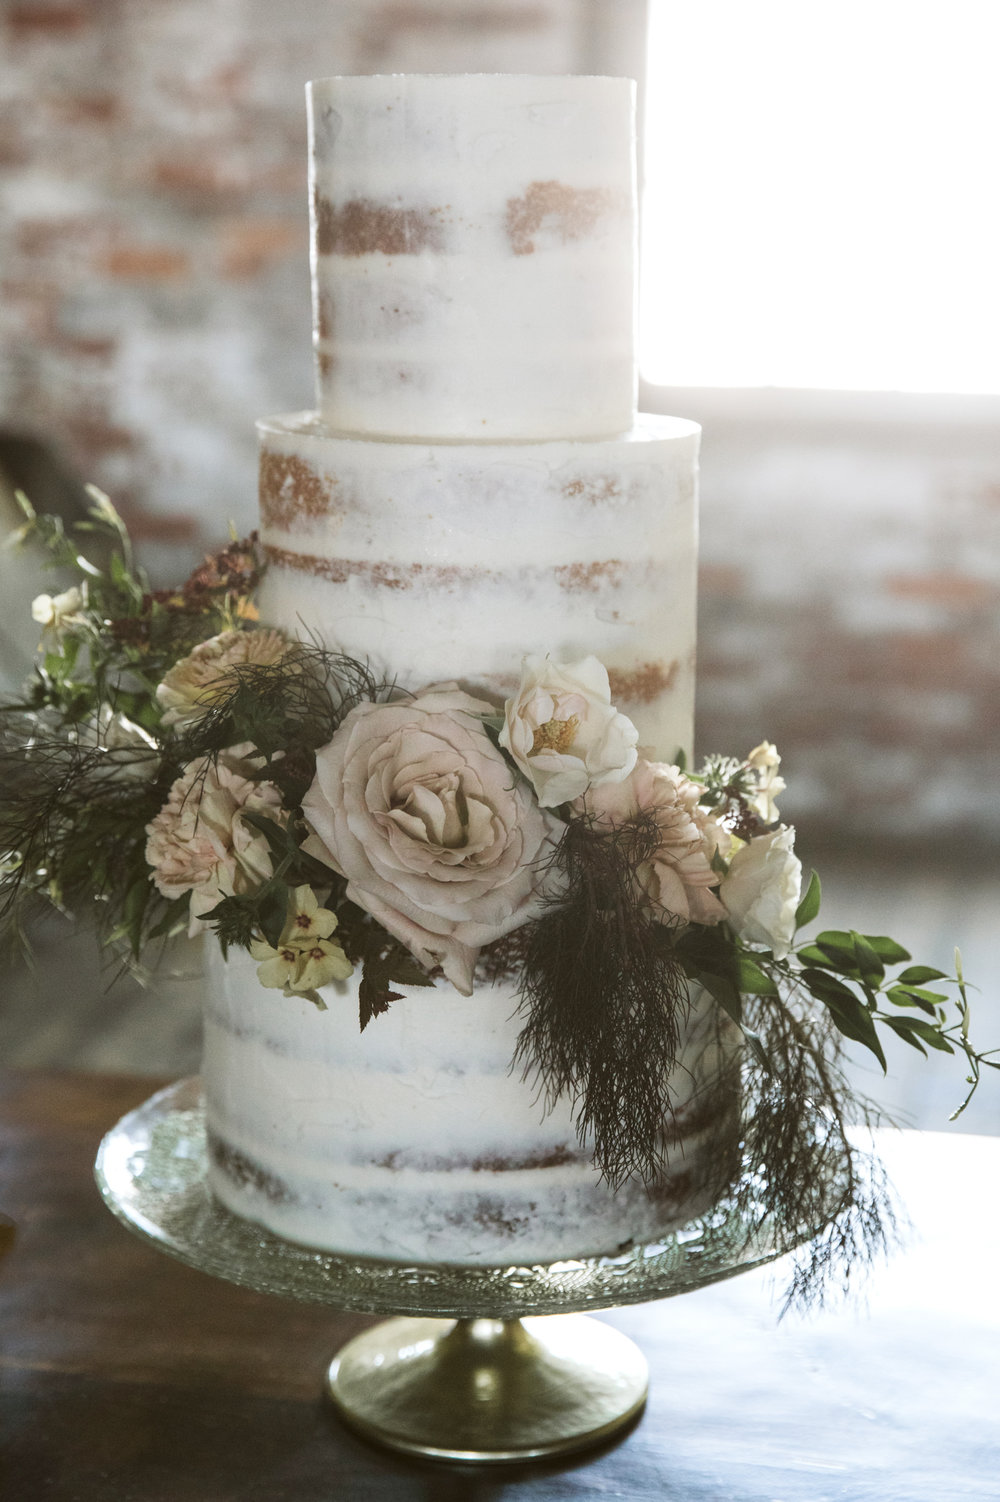  Stunning wedding cake 